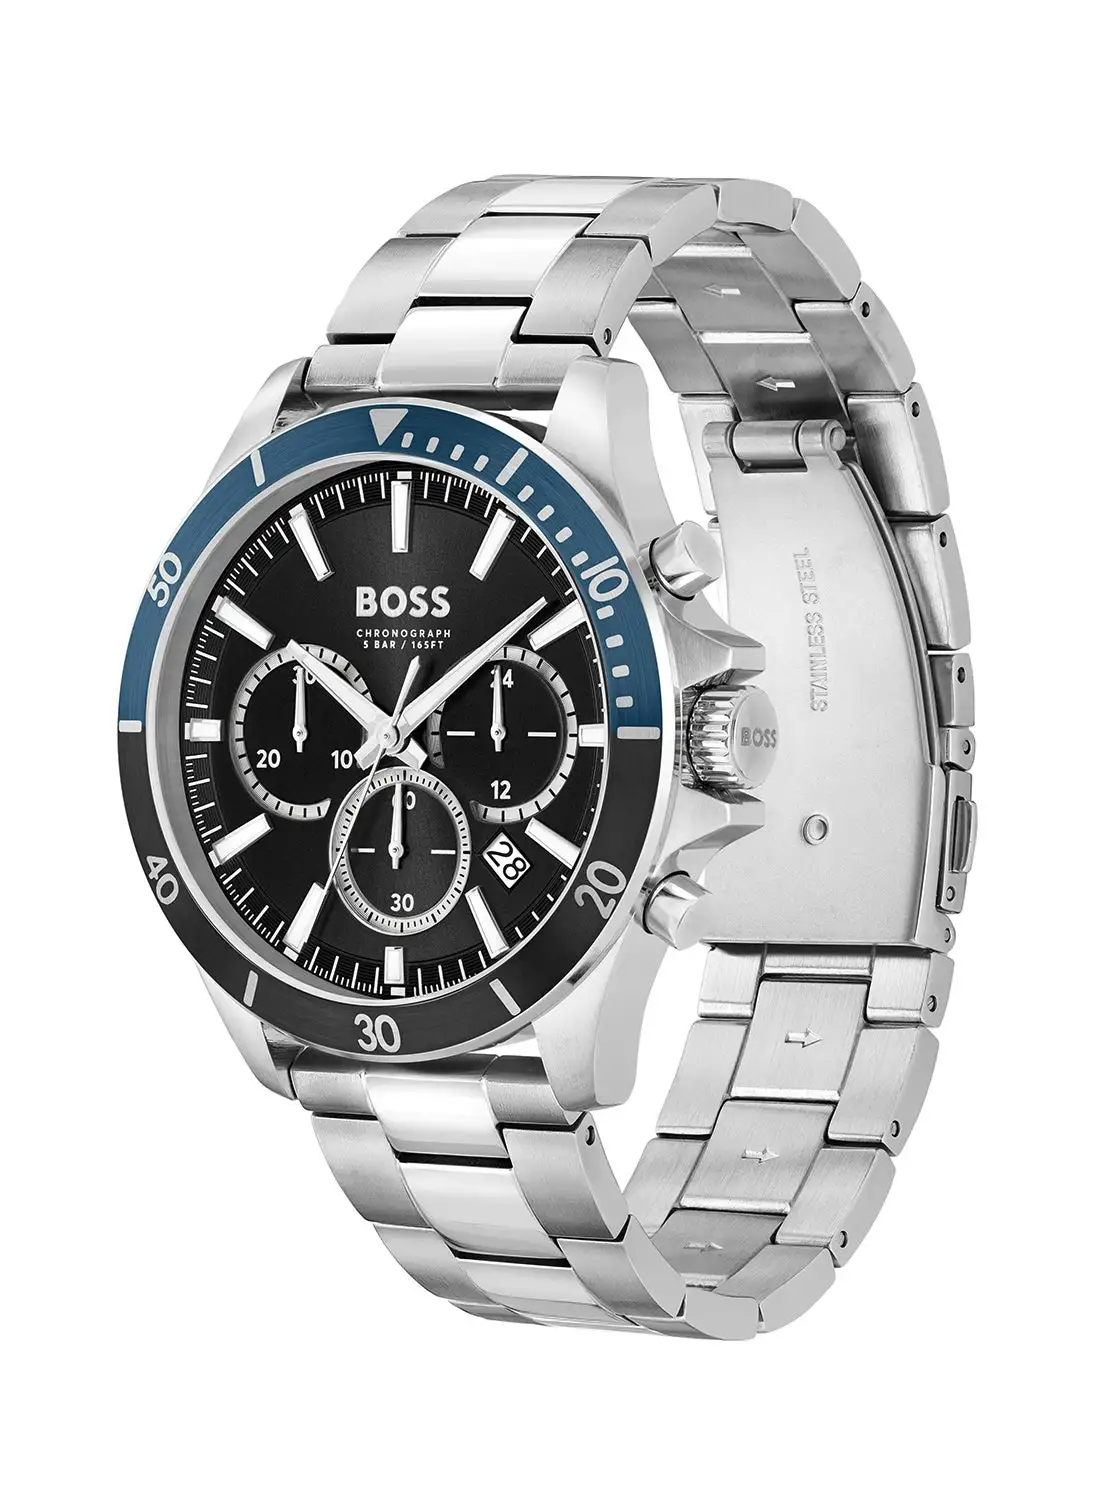 HUGO BOSS Men's Chronograph Round Shape Stainless Steel Wrist Watch 1514101 - 45 Mm